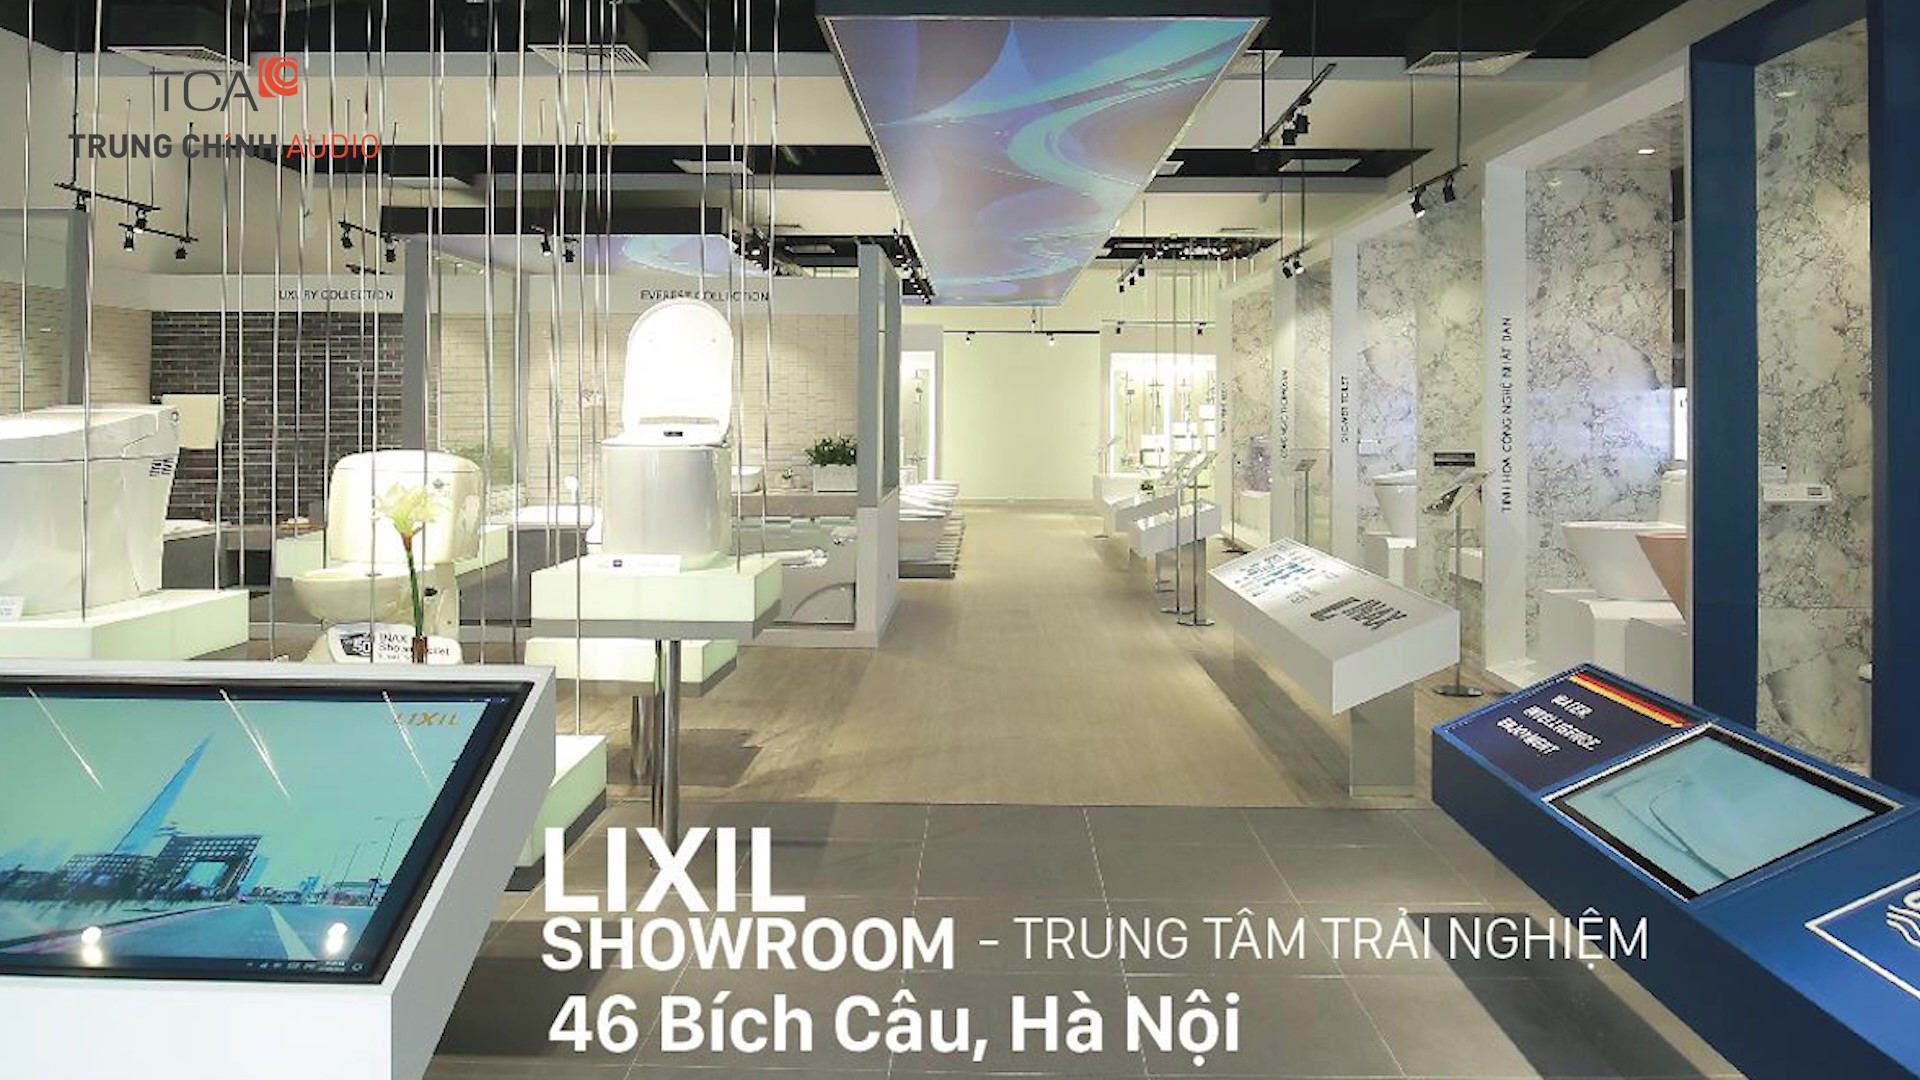 bo-dan-am-thanh-san-khau-hoi-truong-yamaha-cong-ty-van-phong-lixil-showroom